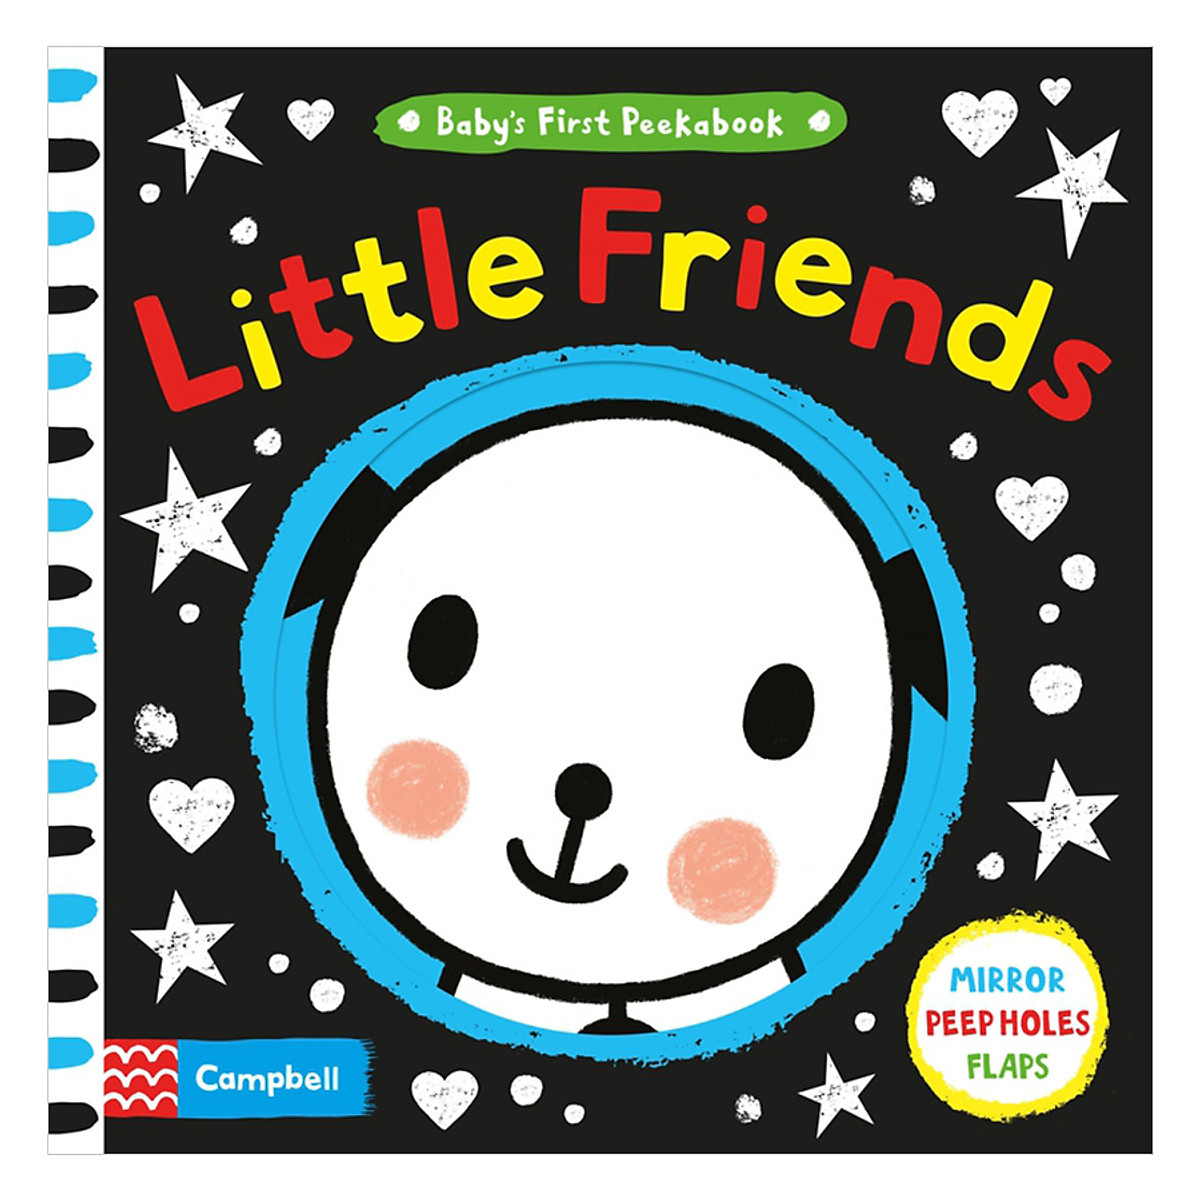 Cambell Mirror Peep Holes Flaps: Baby's First Peekabook: Little Friends